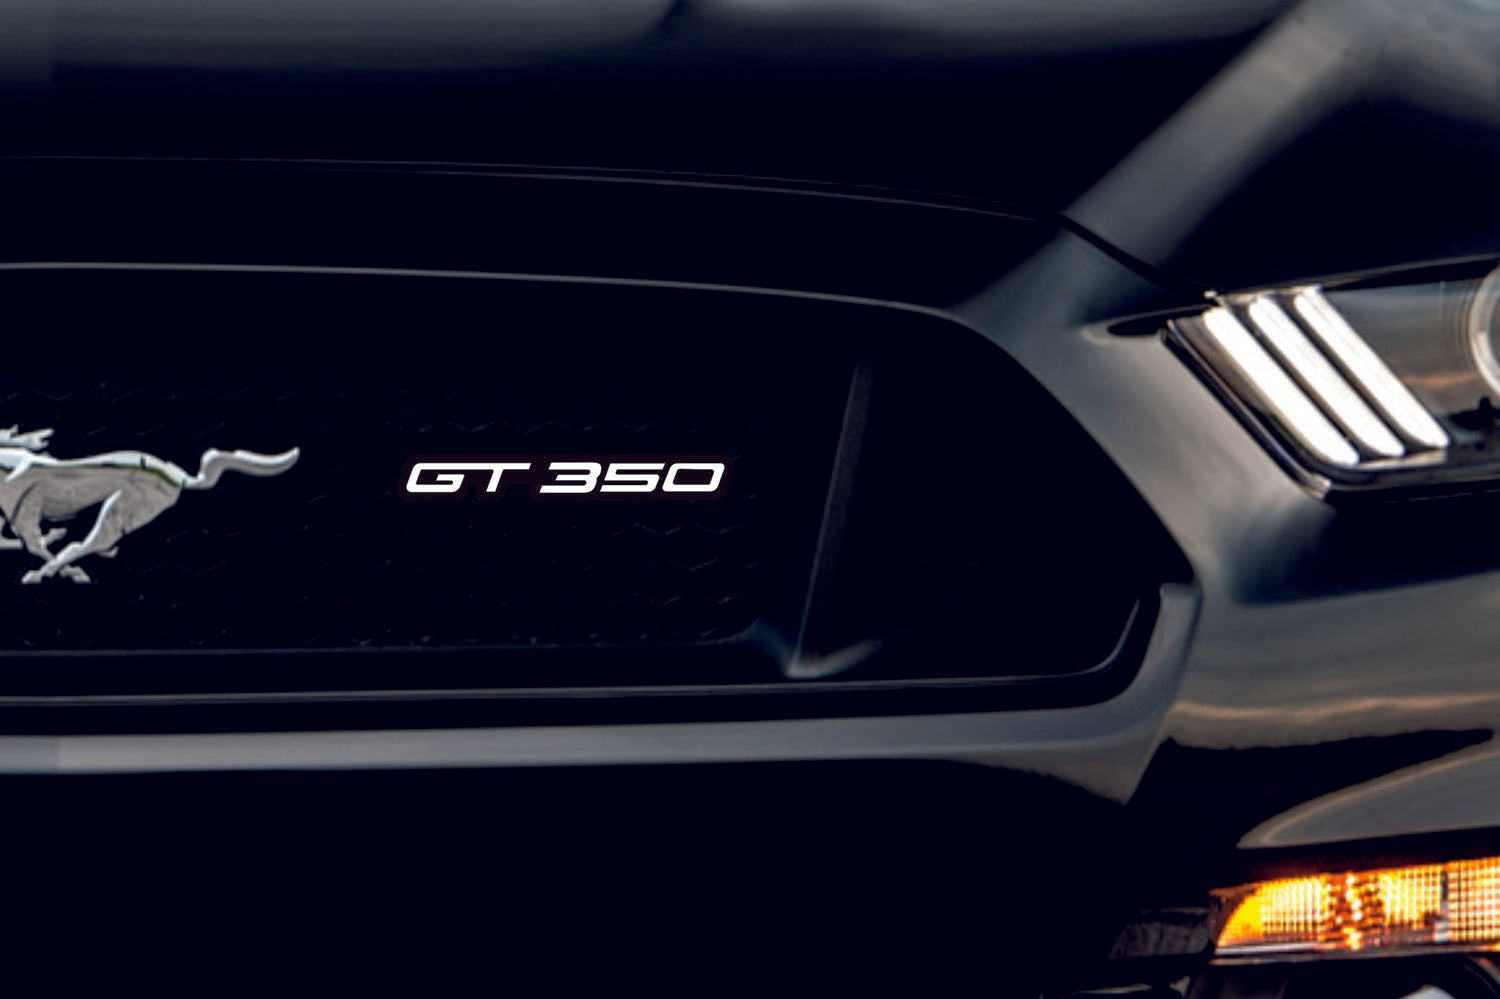 Ford Radiator grille emblem with GT350 logo